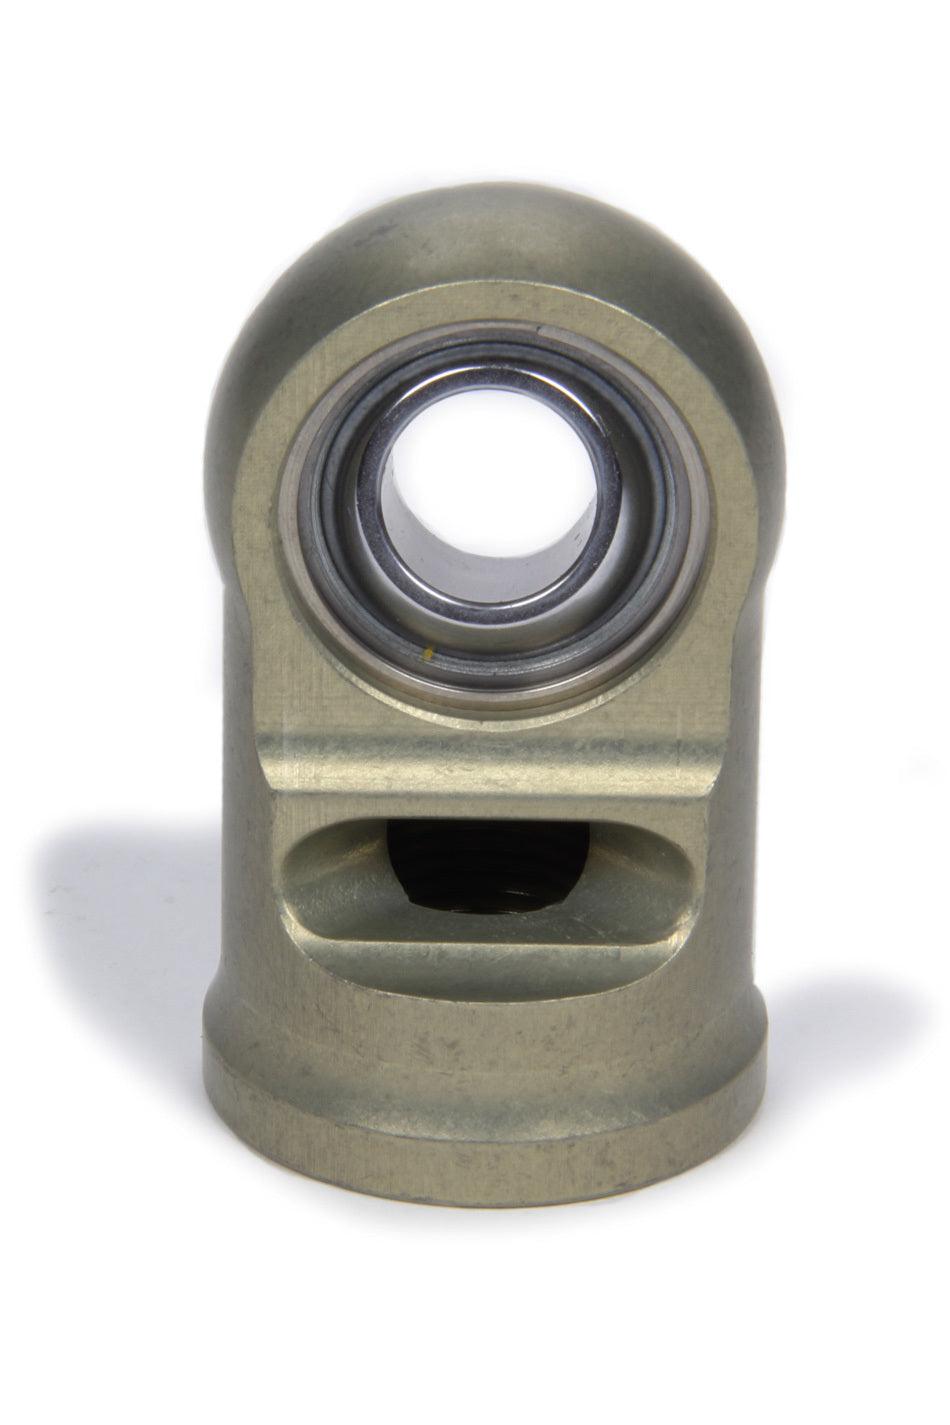 Shock Eyelet w/Mono Ball & Retaining Rings - Burlile Performance Products